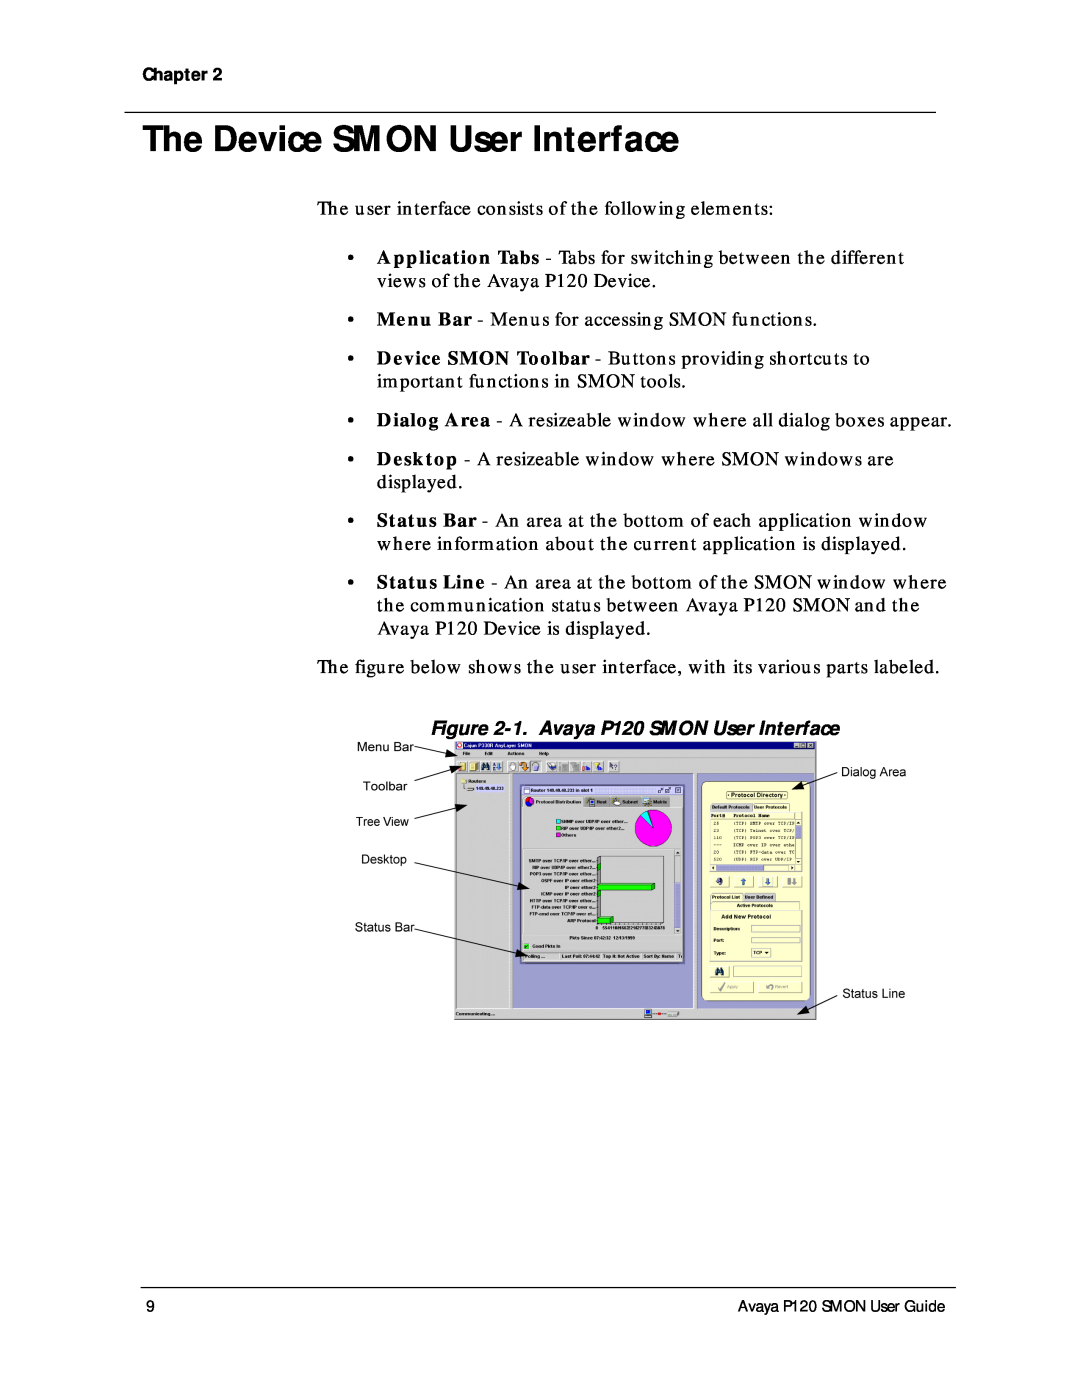 Avaya manual The Device SMON User Interface, 1. Avaya P120 SMON User Interface 